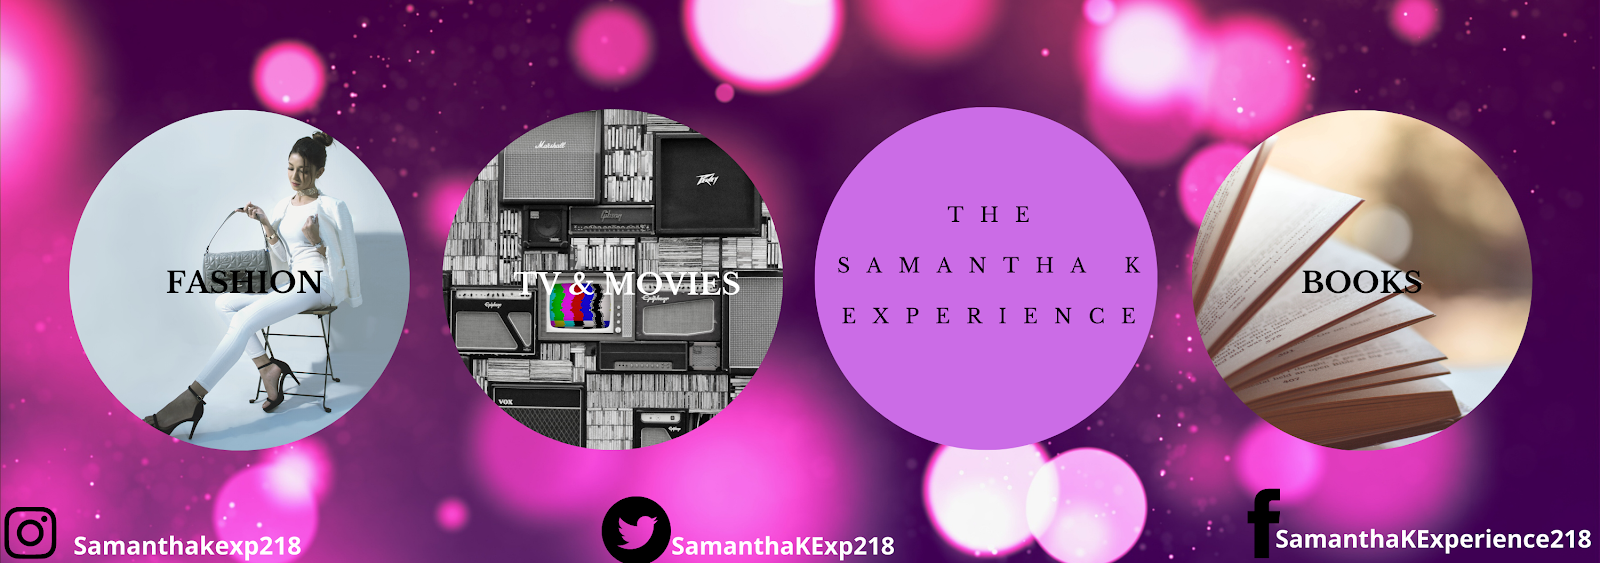 The Samantha K Experience